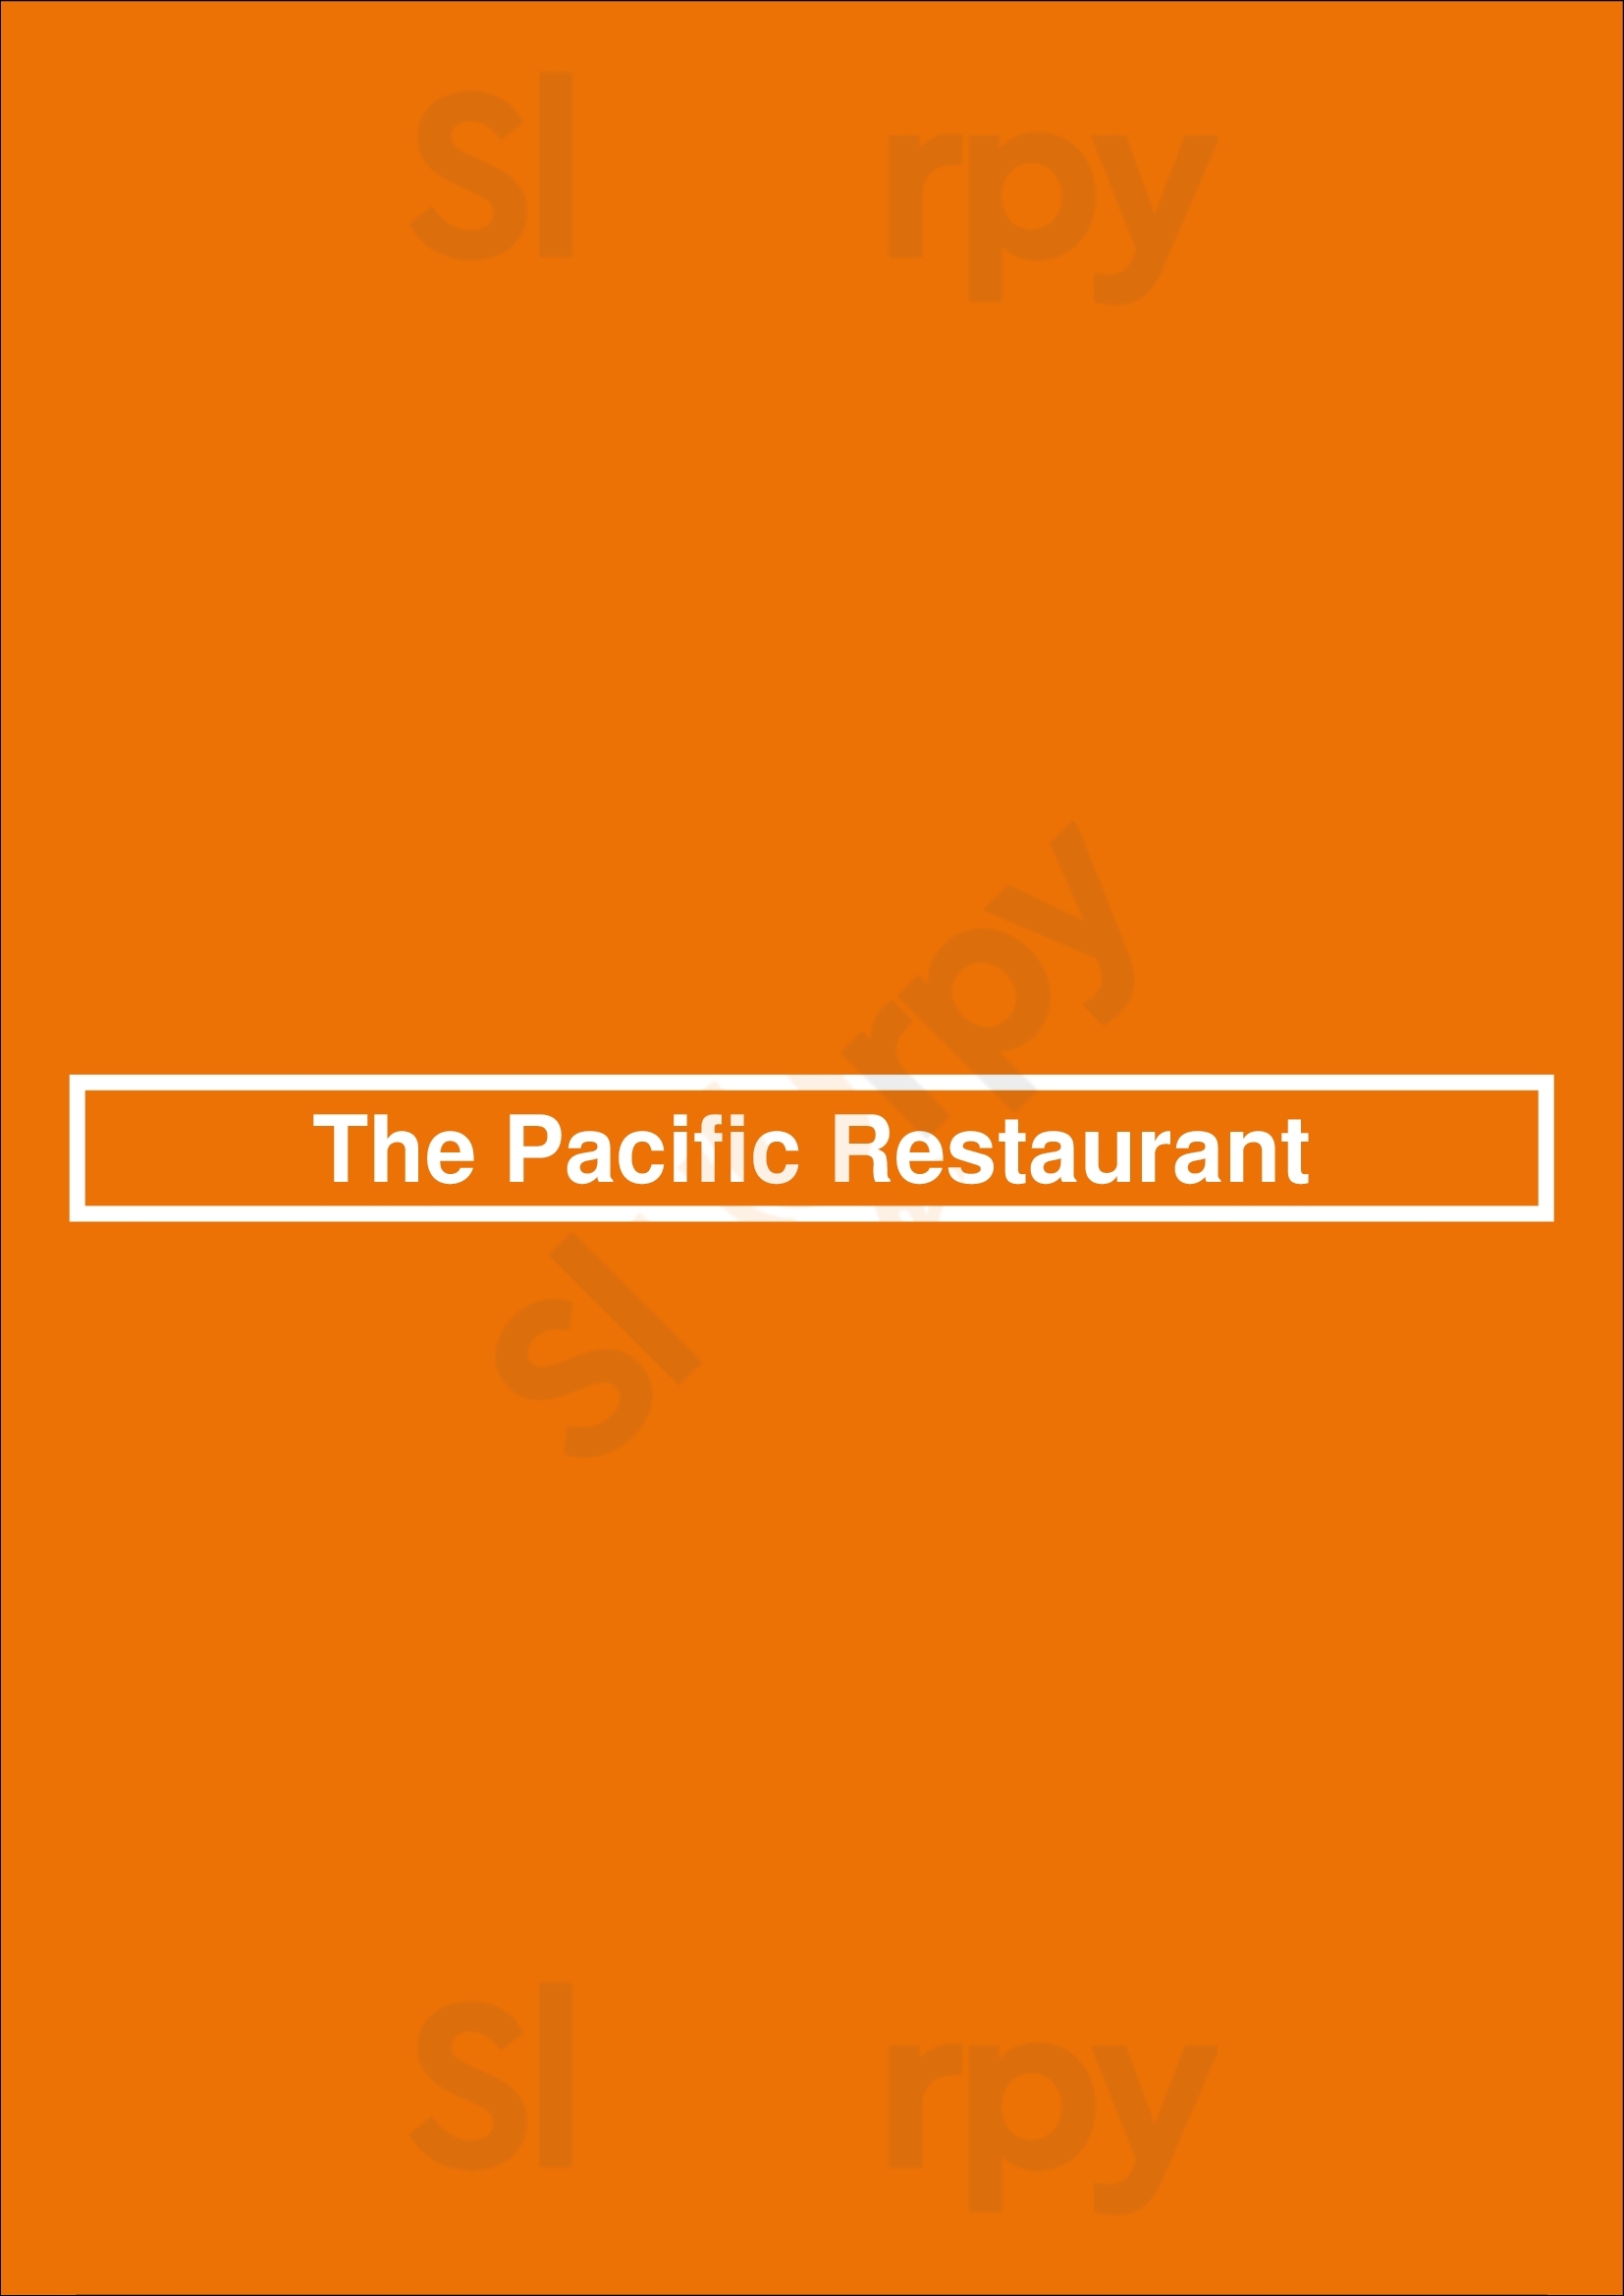 The Pacific Restaurant Victoria Menu - 1